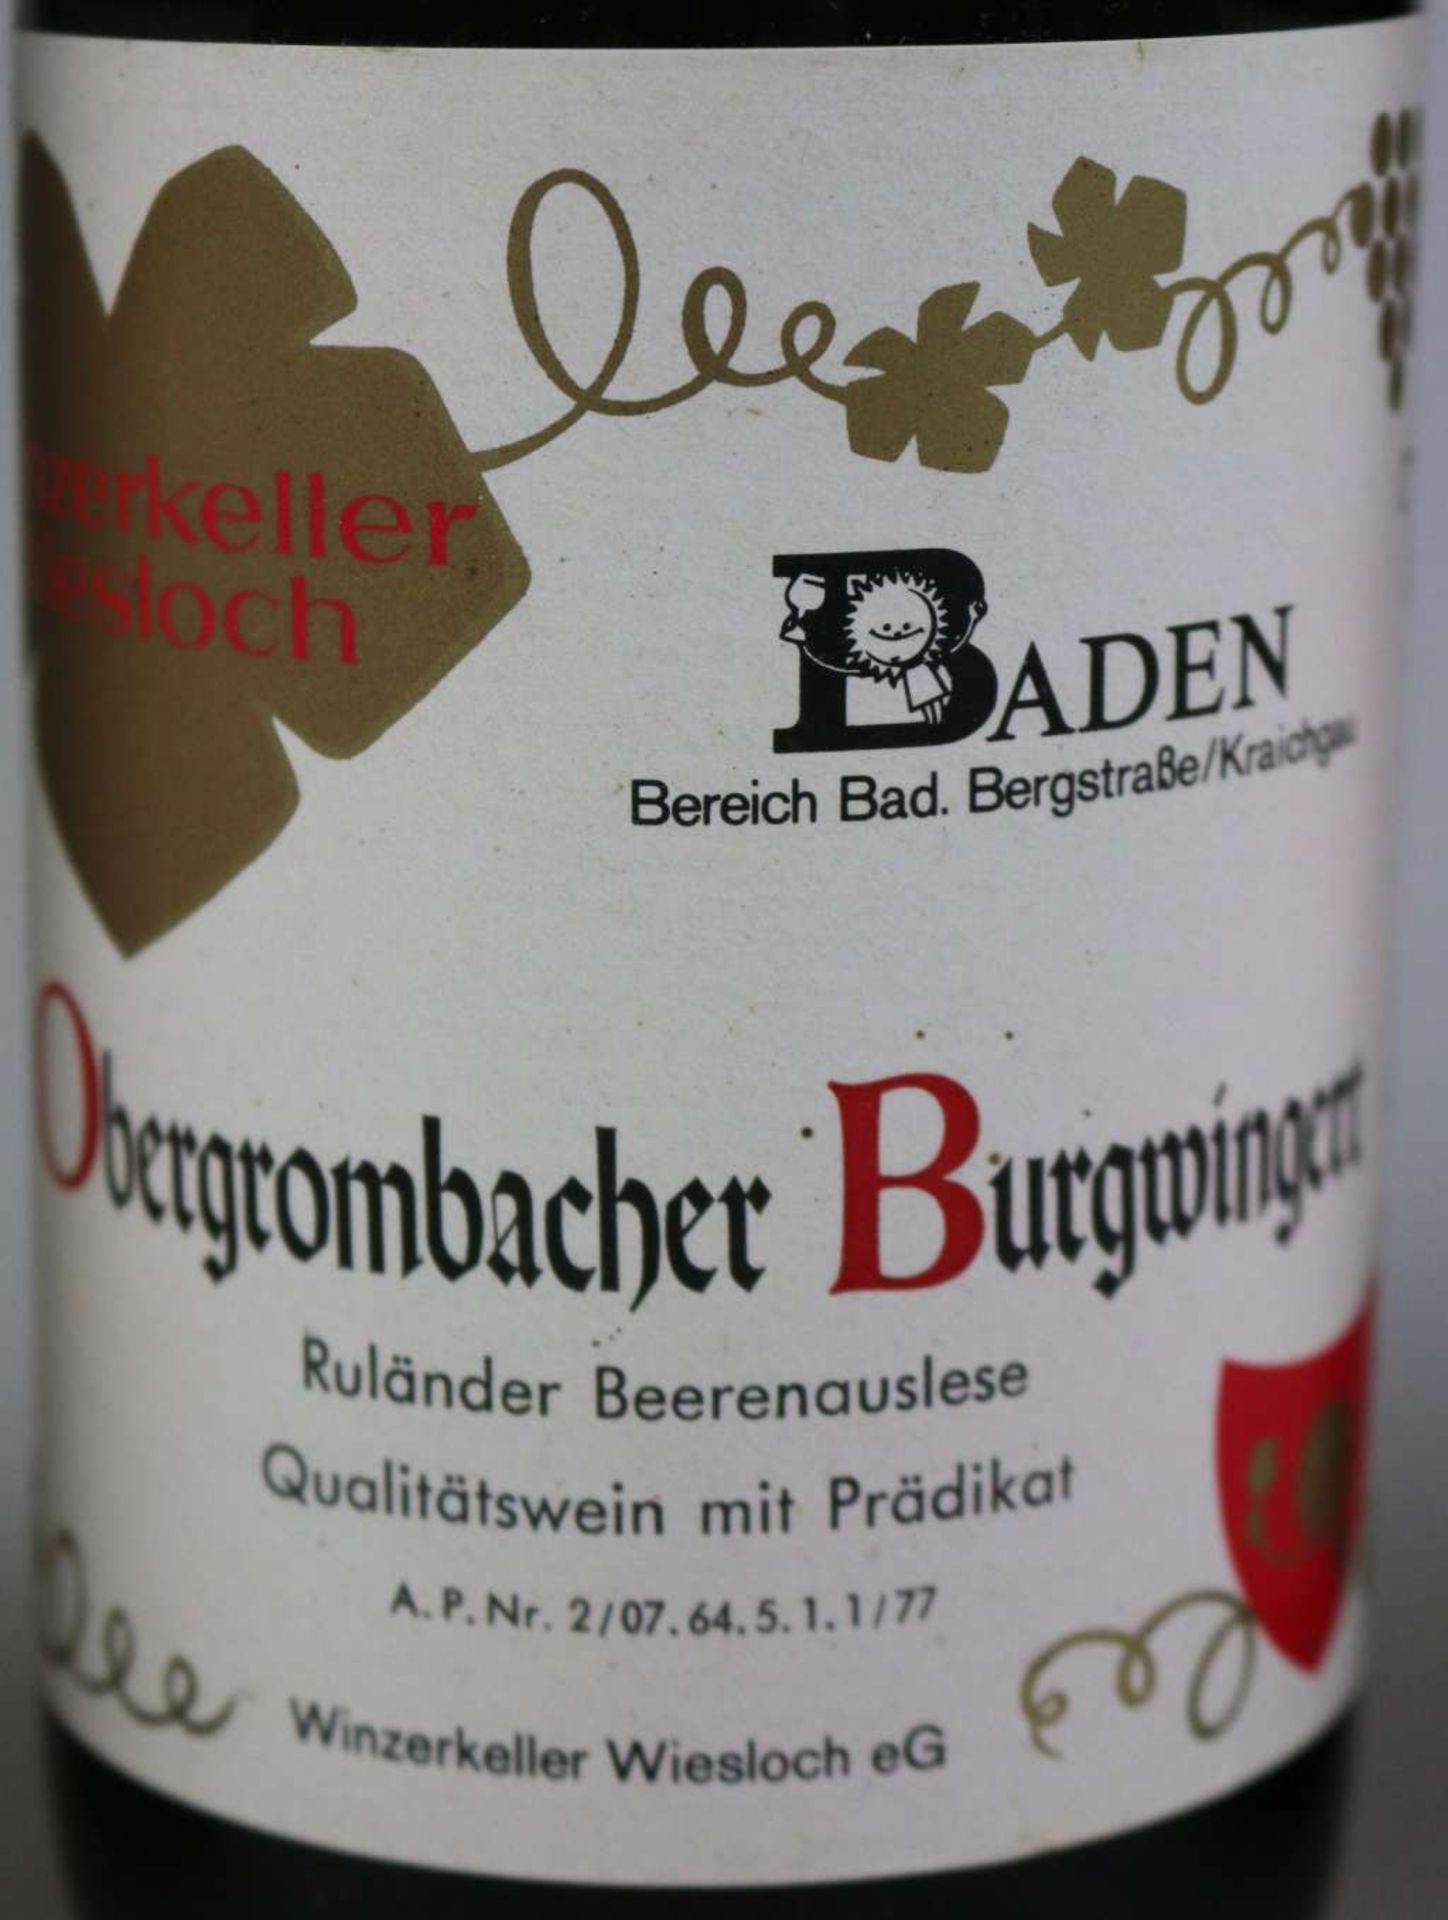 Obergrombacher Burgwingert - Image 2 of 3